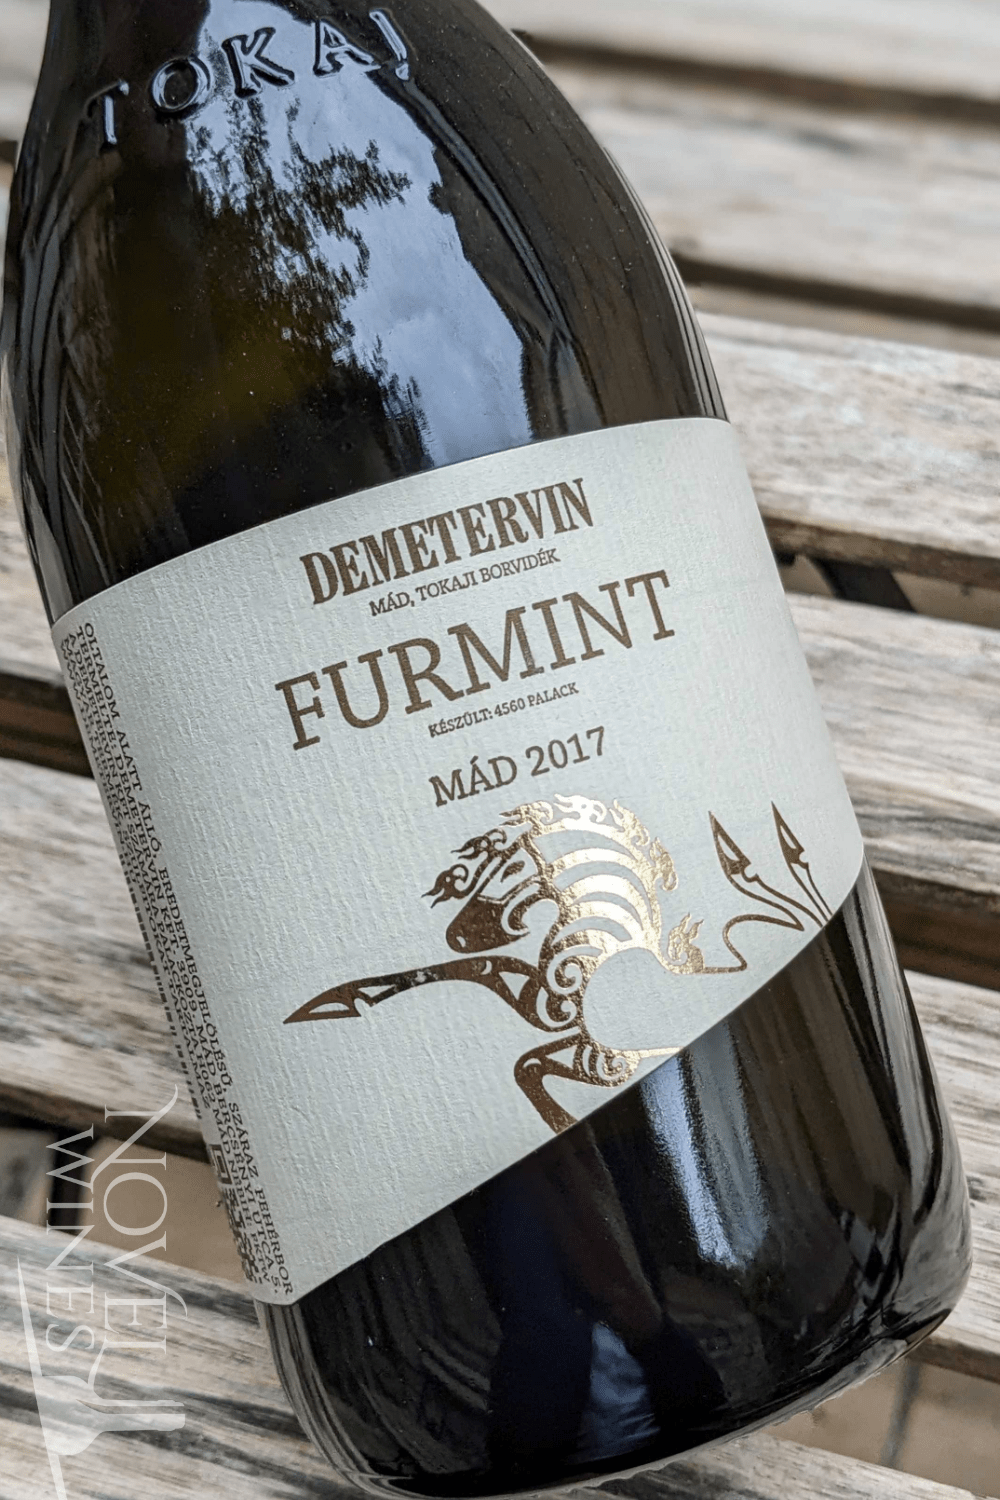 Demeter White Wine Demetervin Furmint 2017, Mad, Tokaj